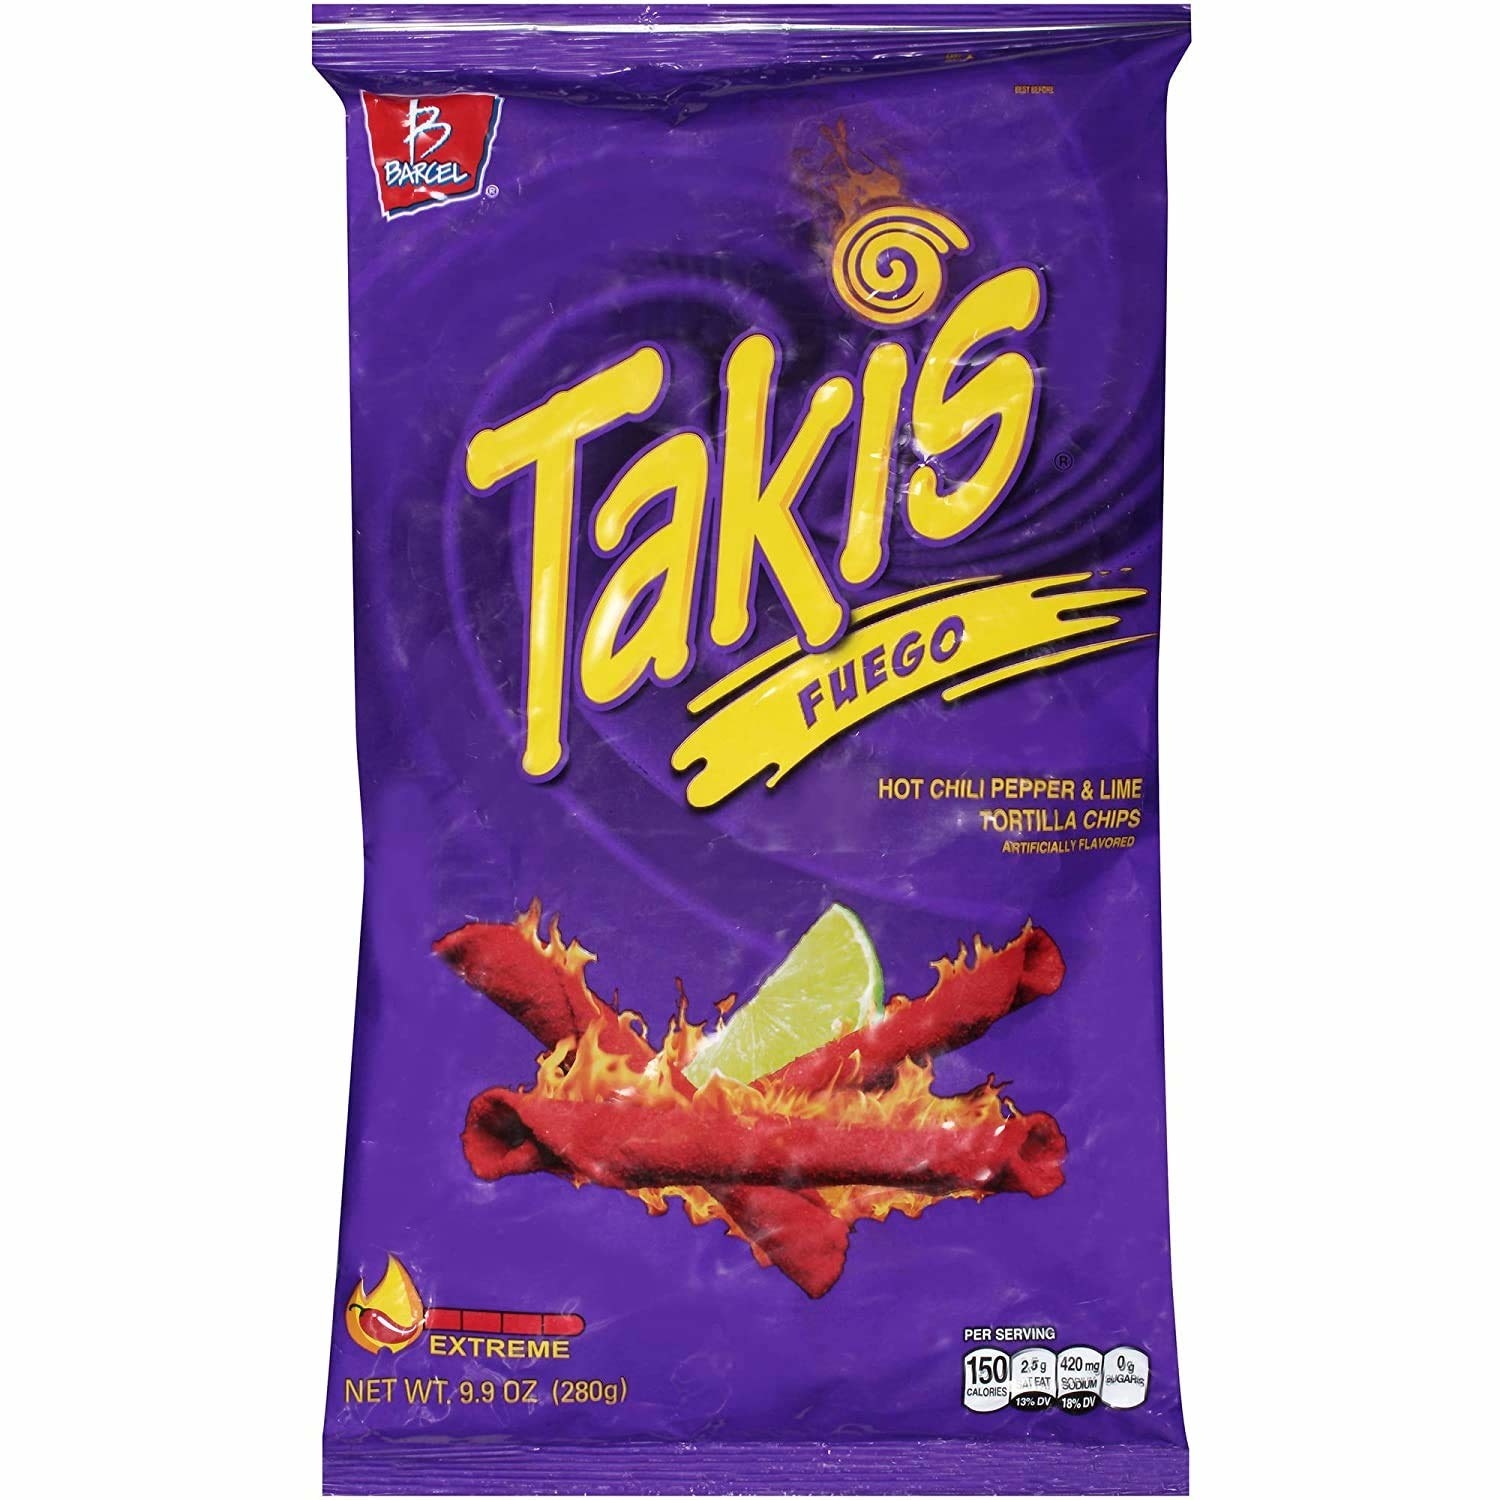 A bag of Fuego Takis.